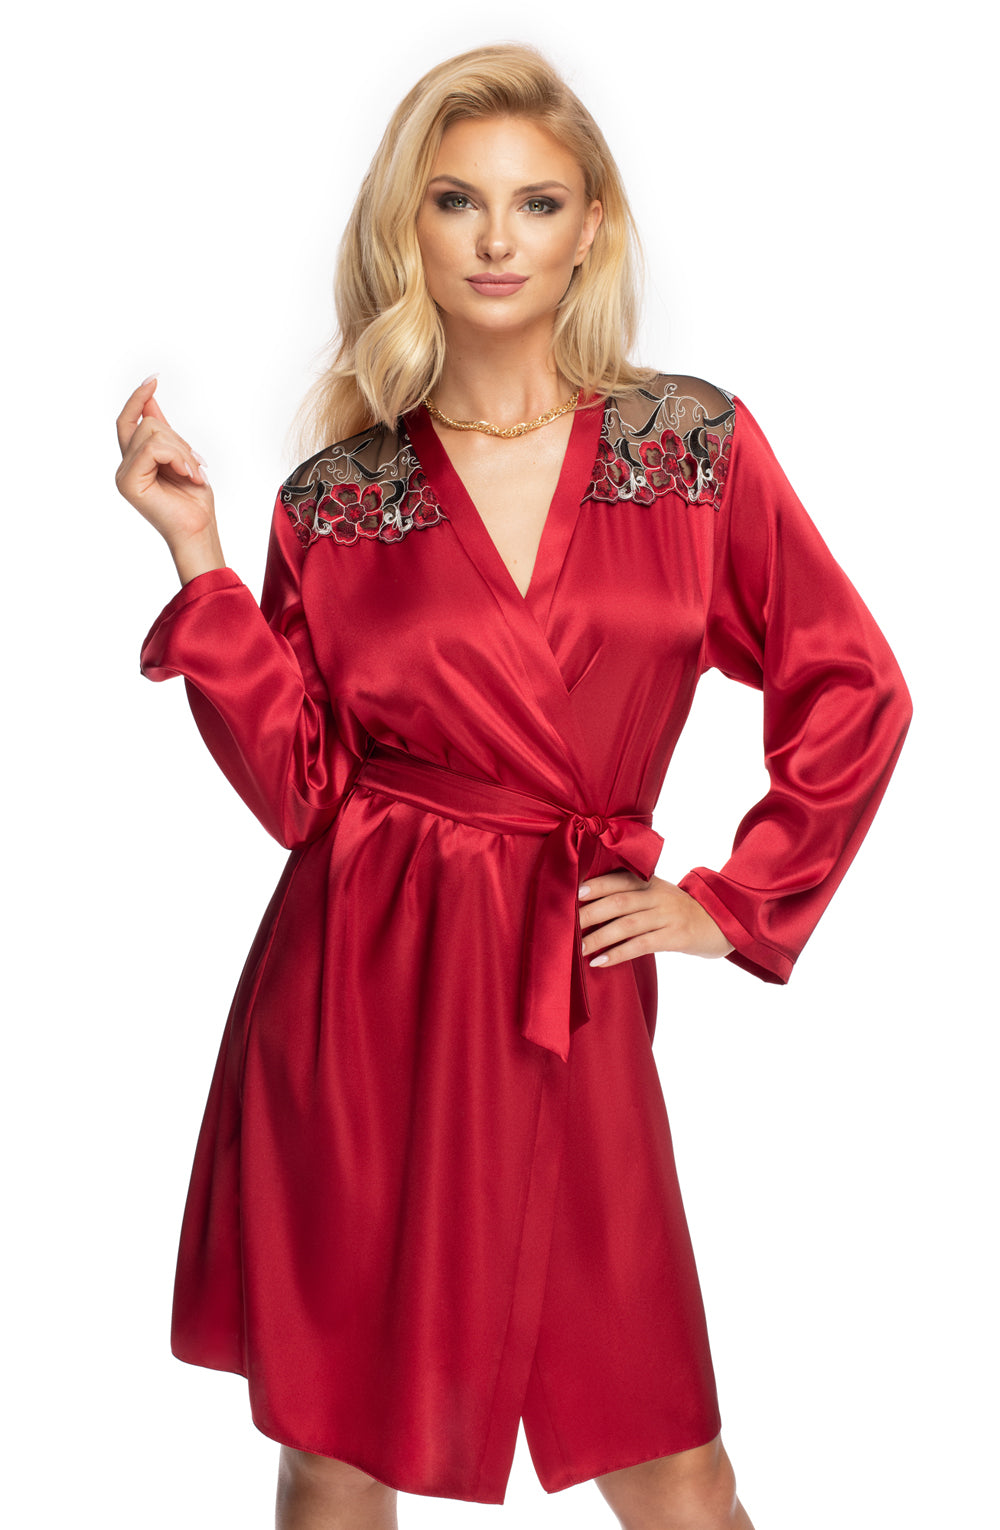 Irall Elodie Dressing Gown Burgundy - PureDiva